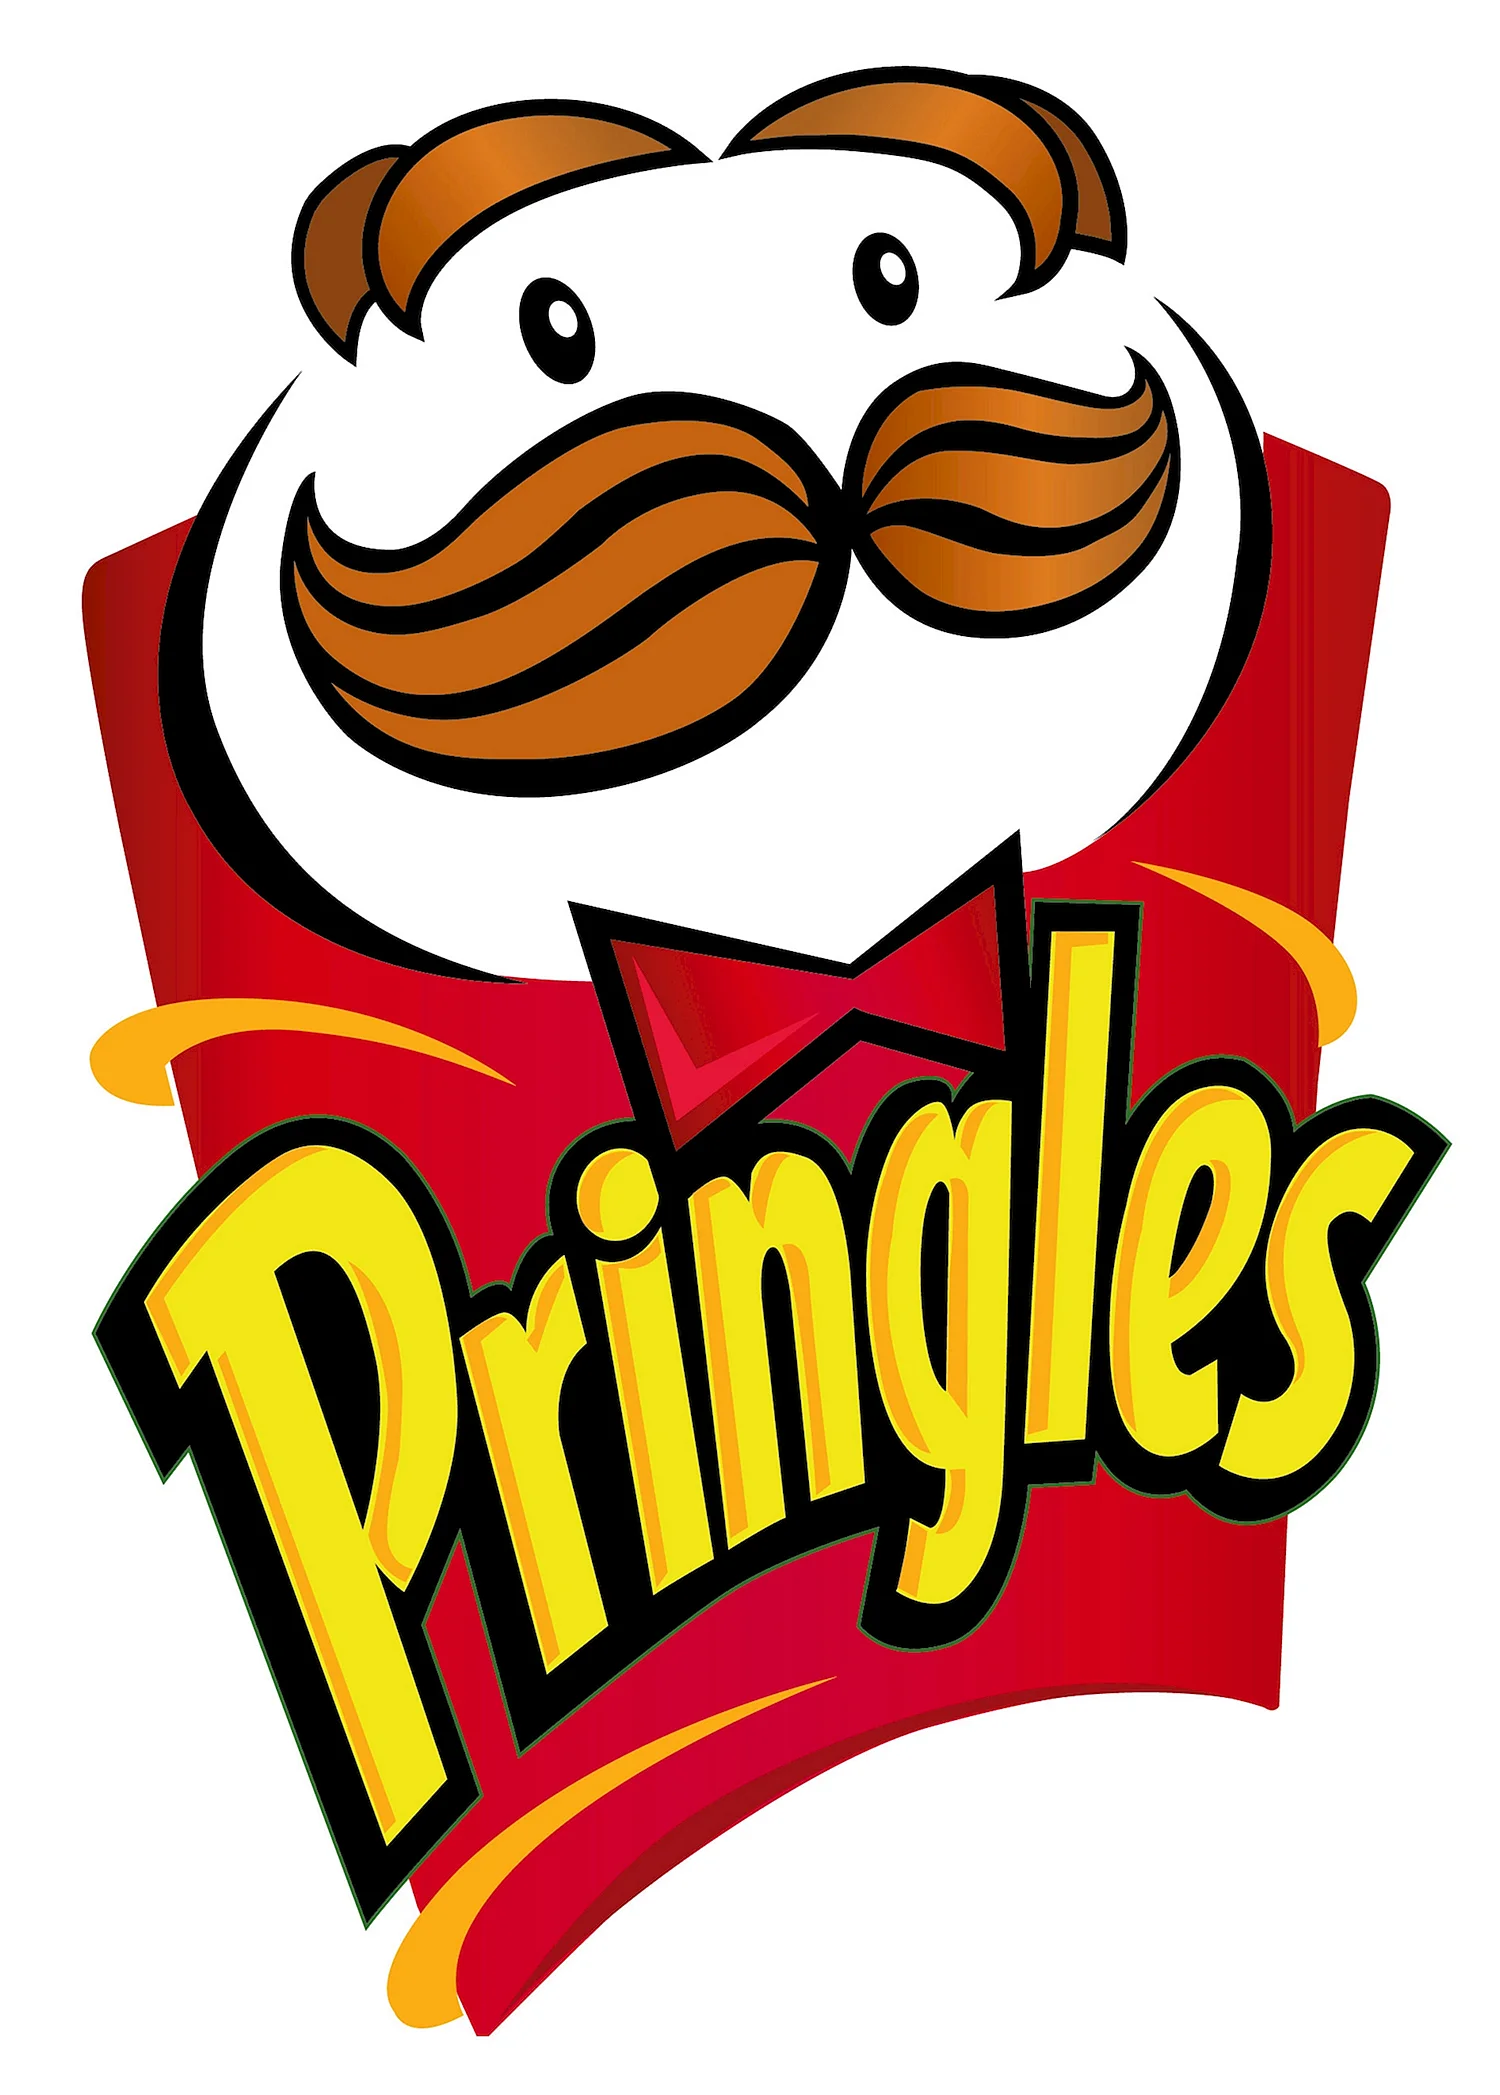 Логотип принглс (25 лучших фото)